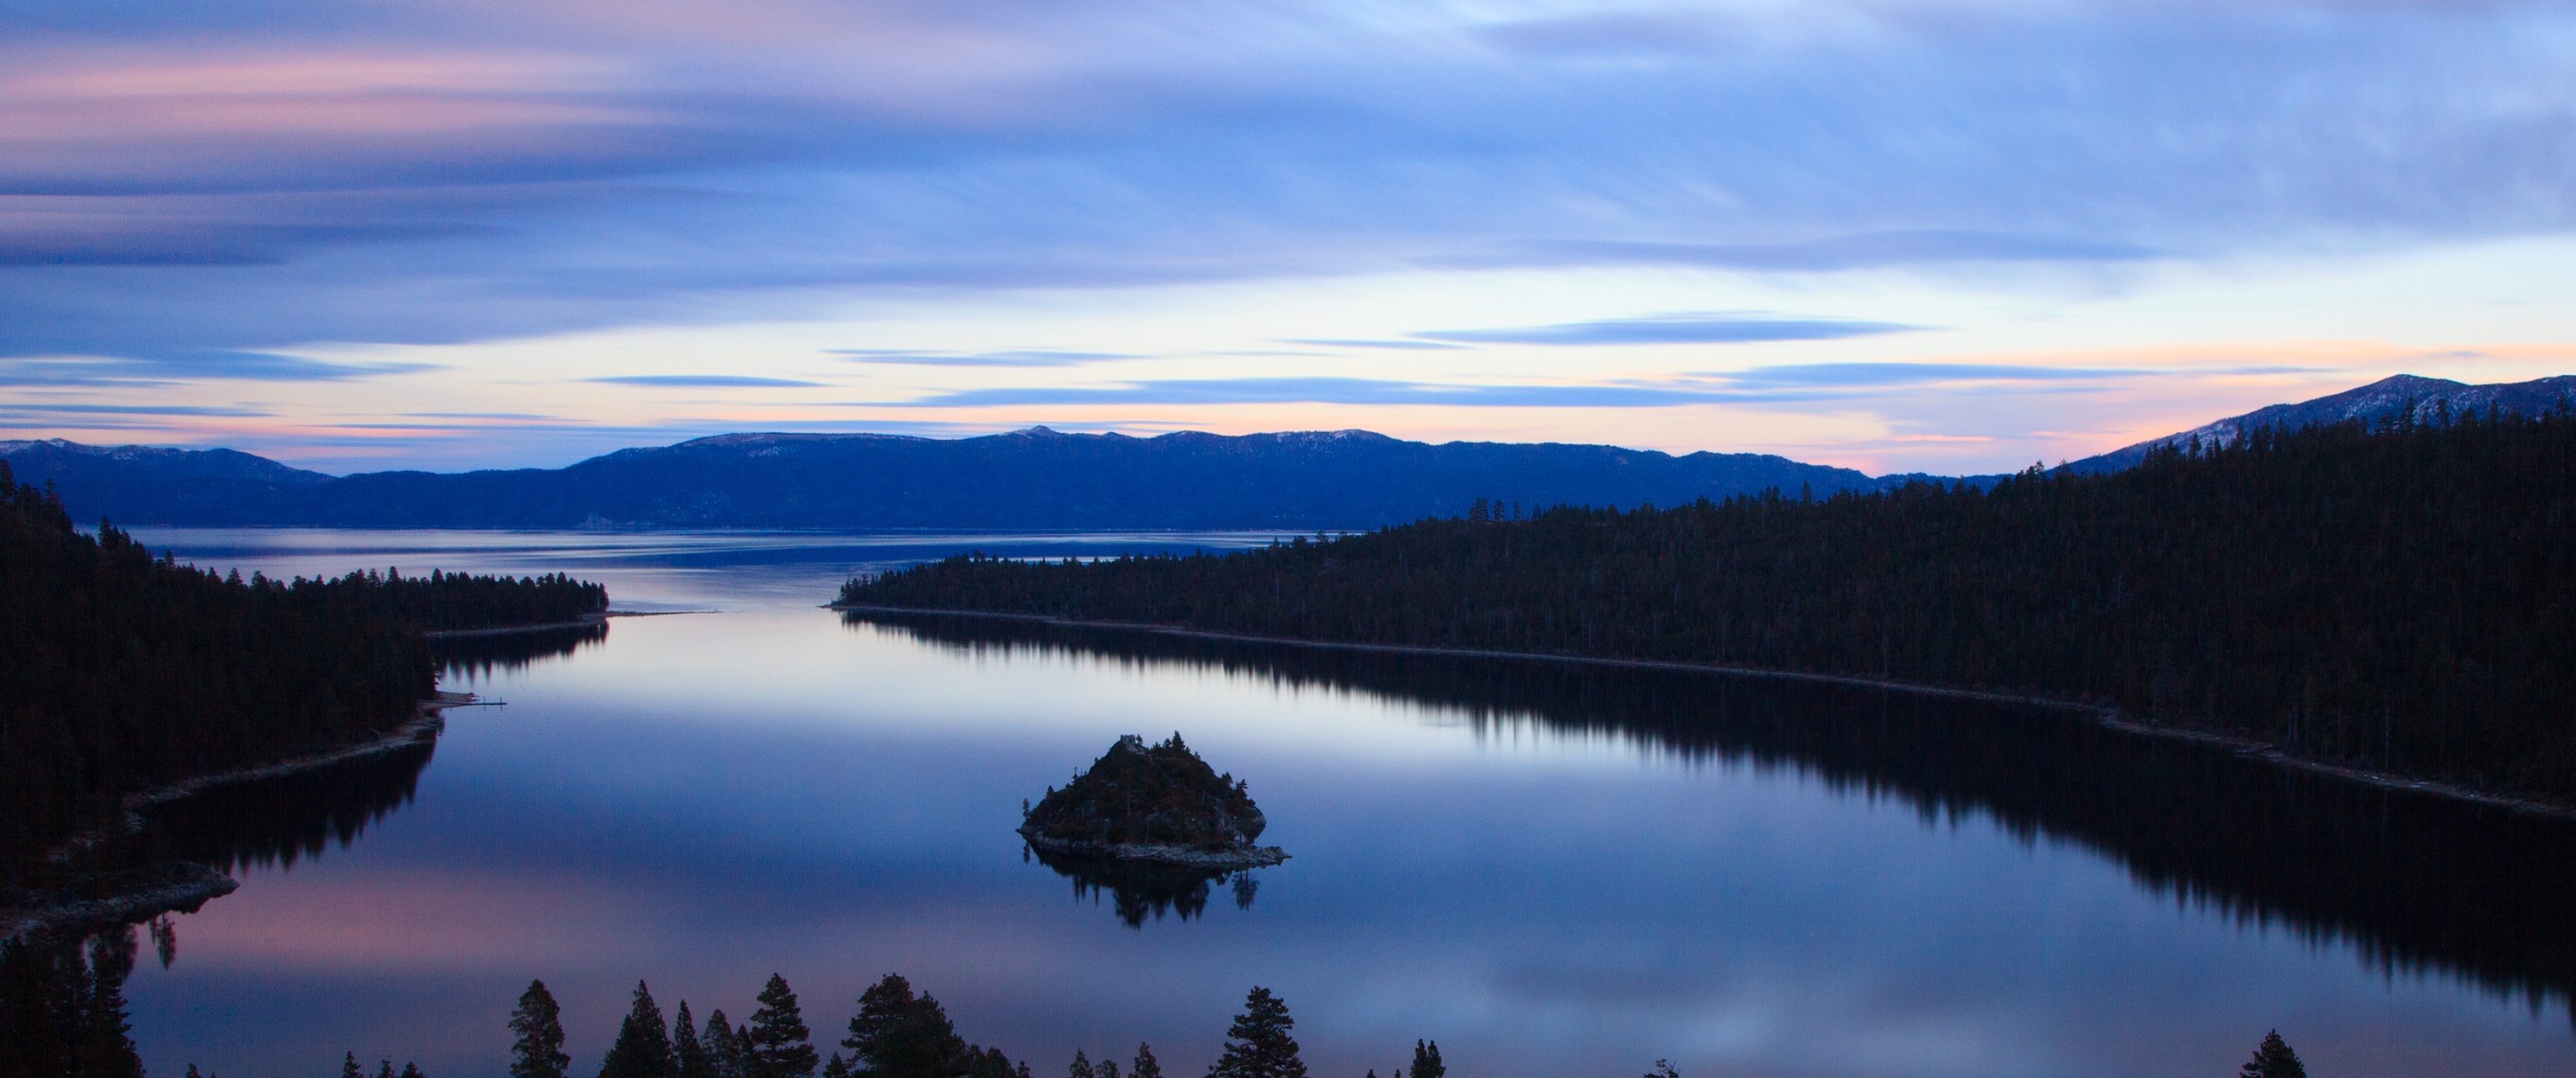 Emerald Bay wallpaper, Lake Tahoe, California, Stunning nature, 3440x1440 Dual Screen Desktop